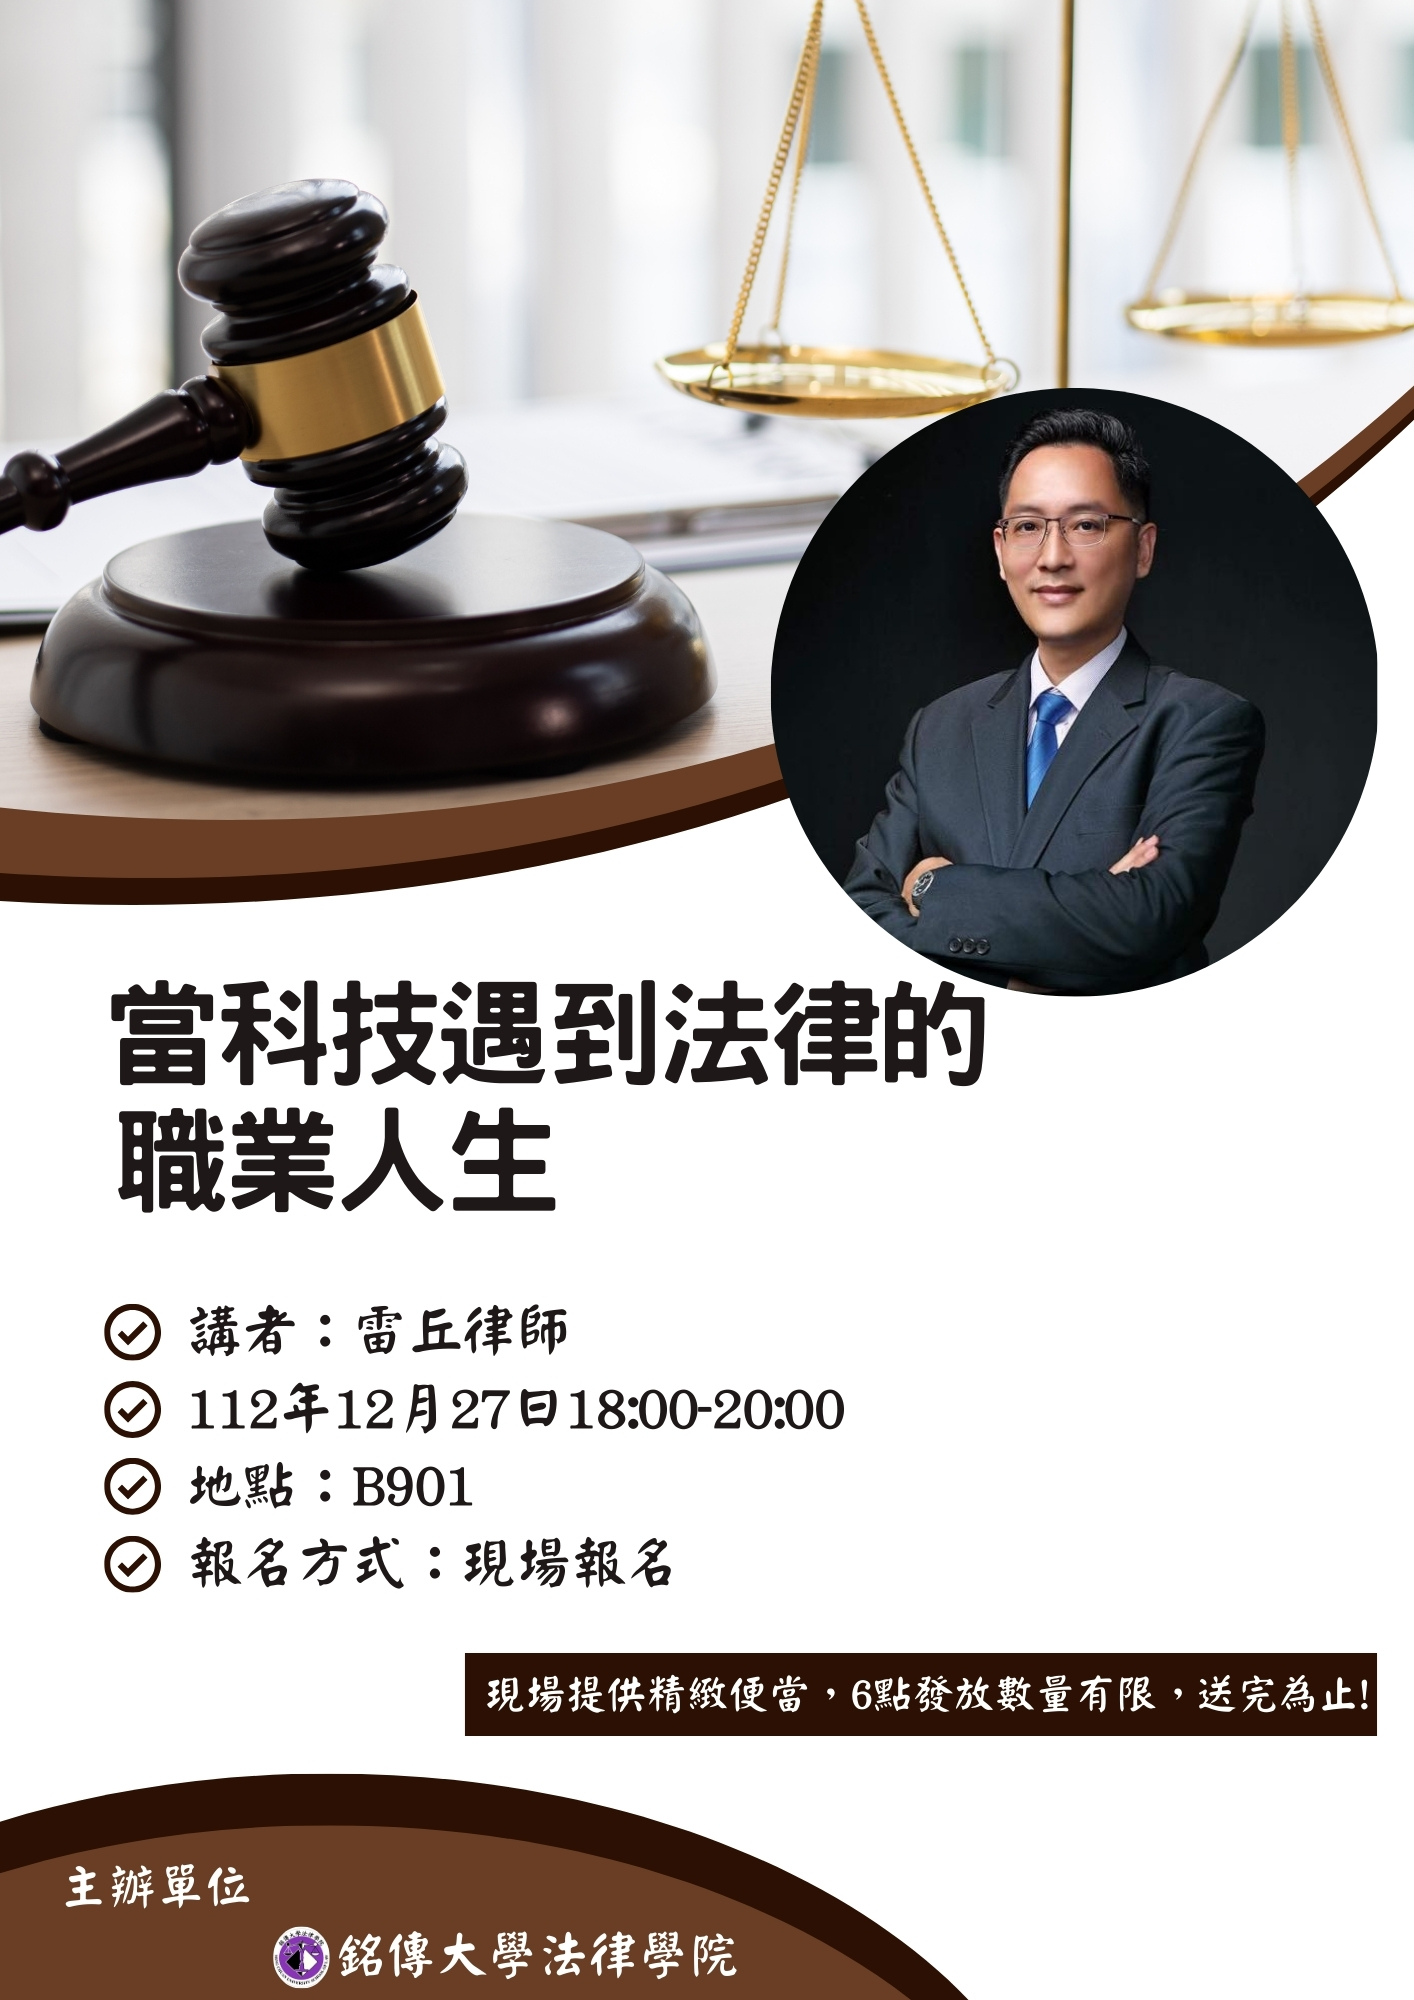 Featured image for “【講座宣傳】雷丘律師-當科技遇到法律的職業人生”